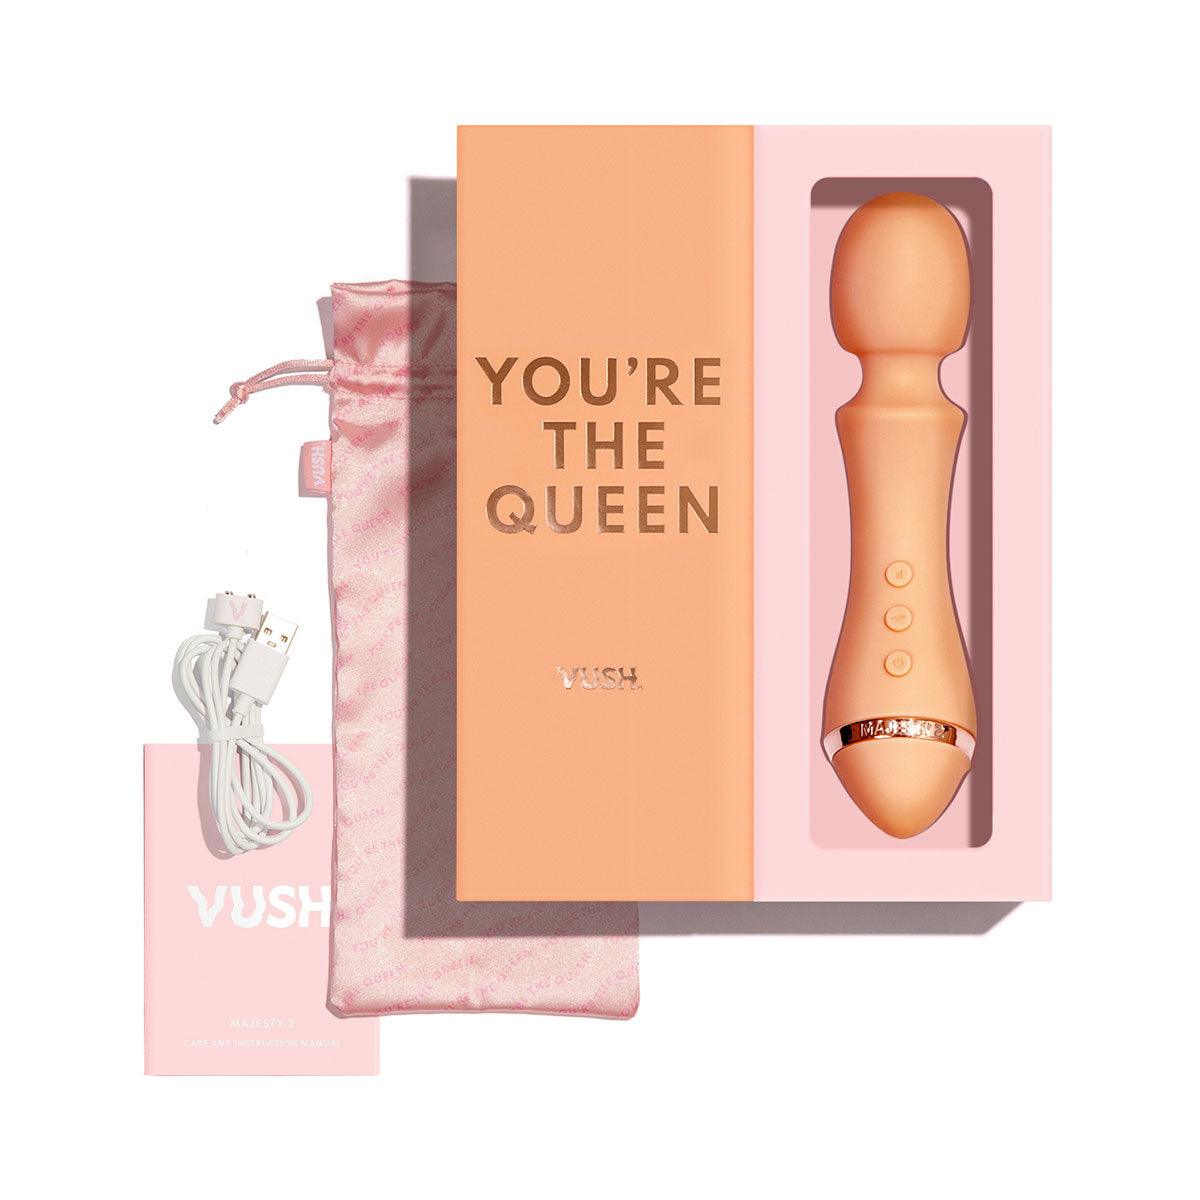 VUSH Majesty 2 Wand Vibrator - Buy At Luxury Toy X - Free 3-Day Shipping